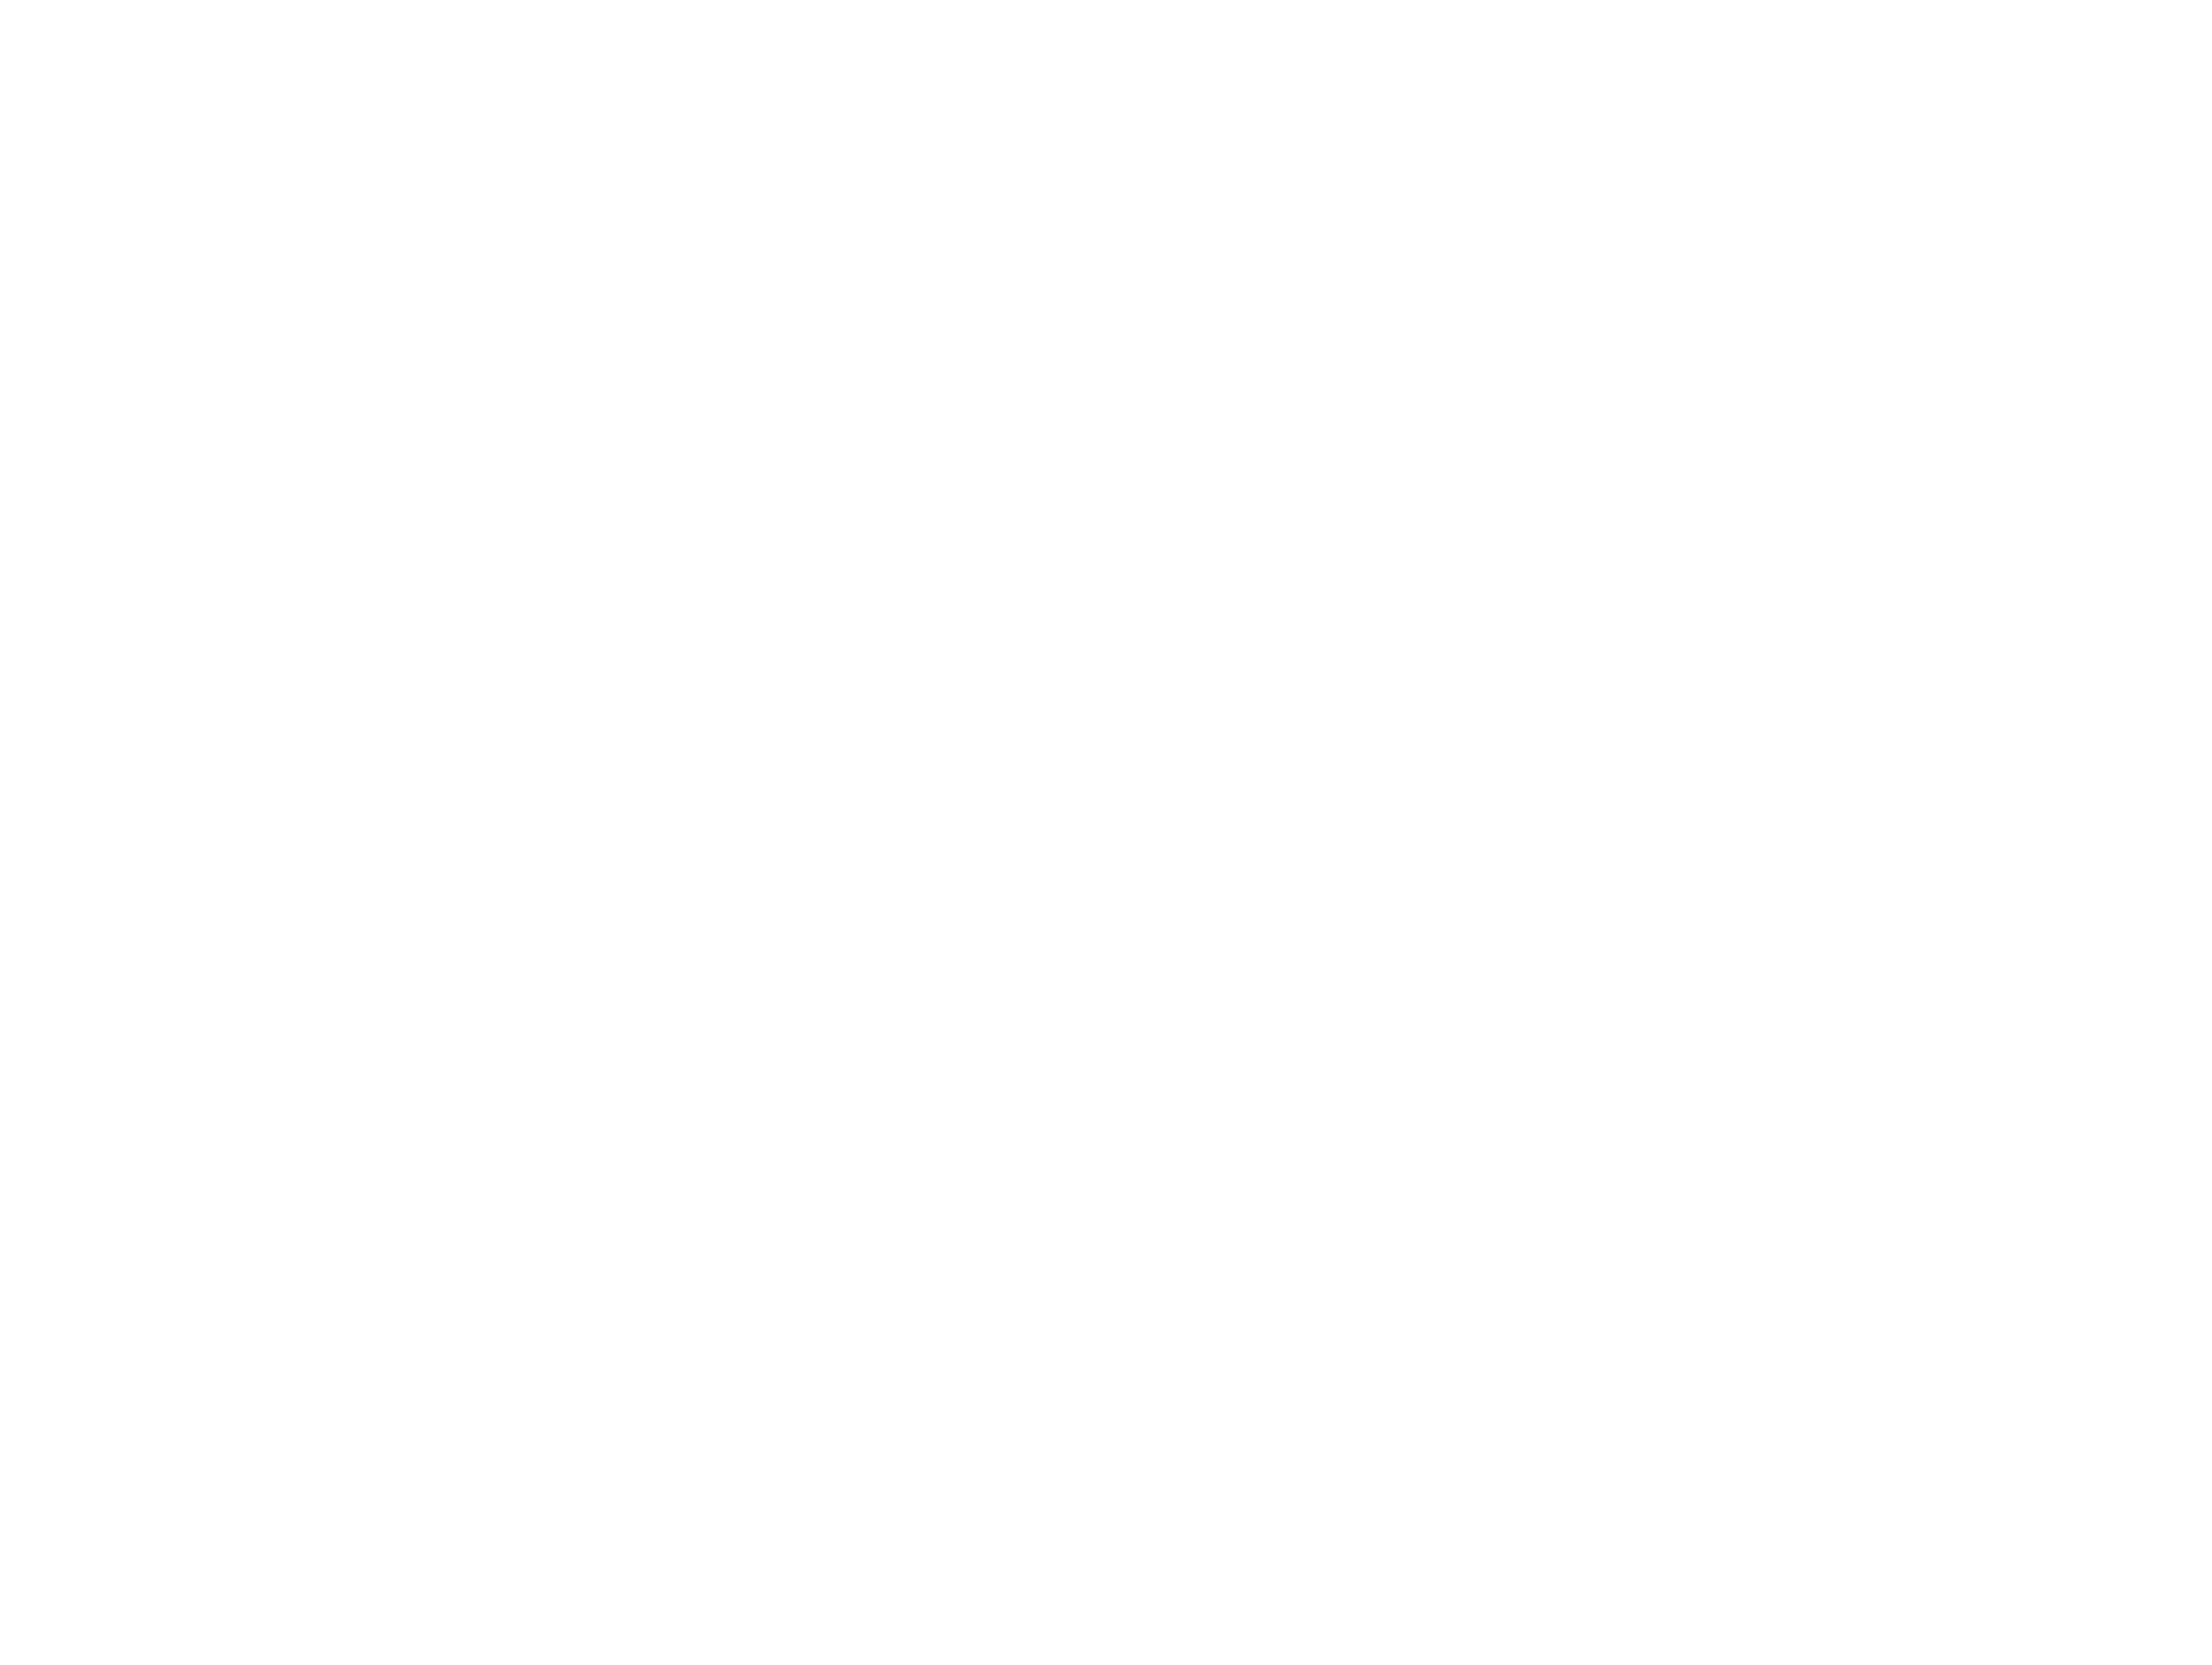 OhioSE Economic Development